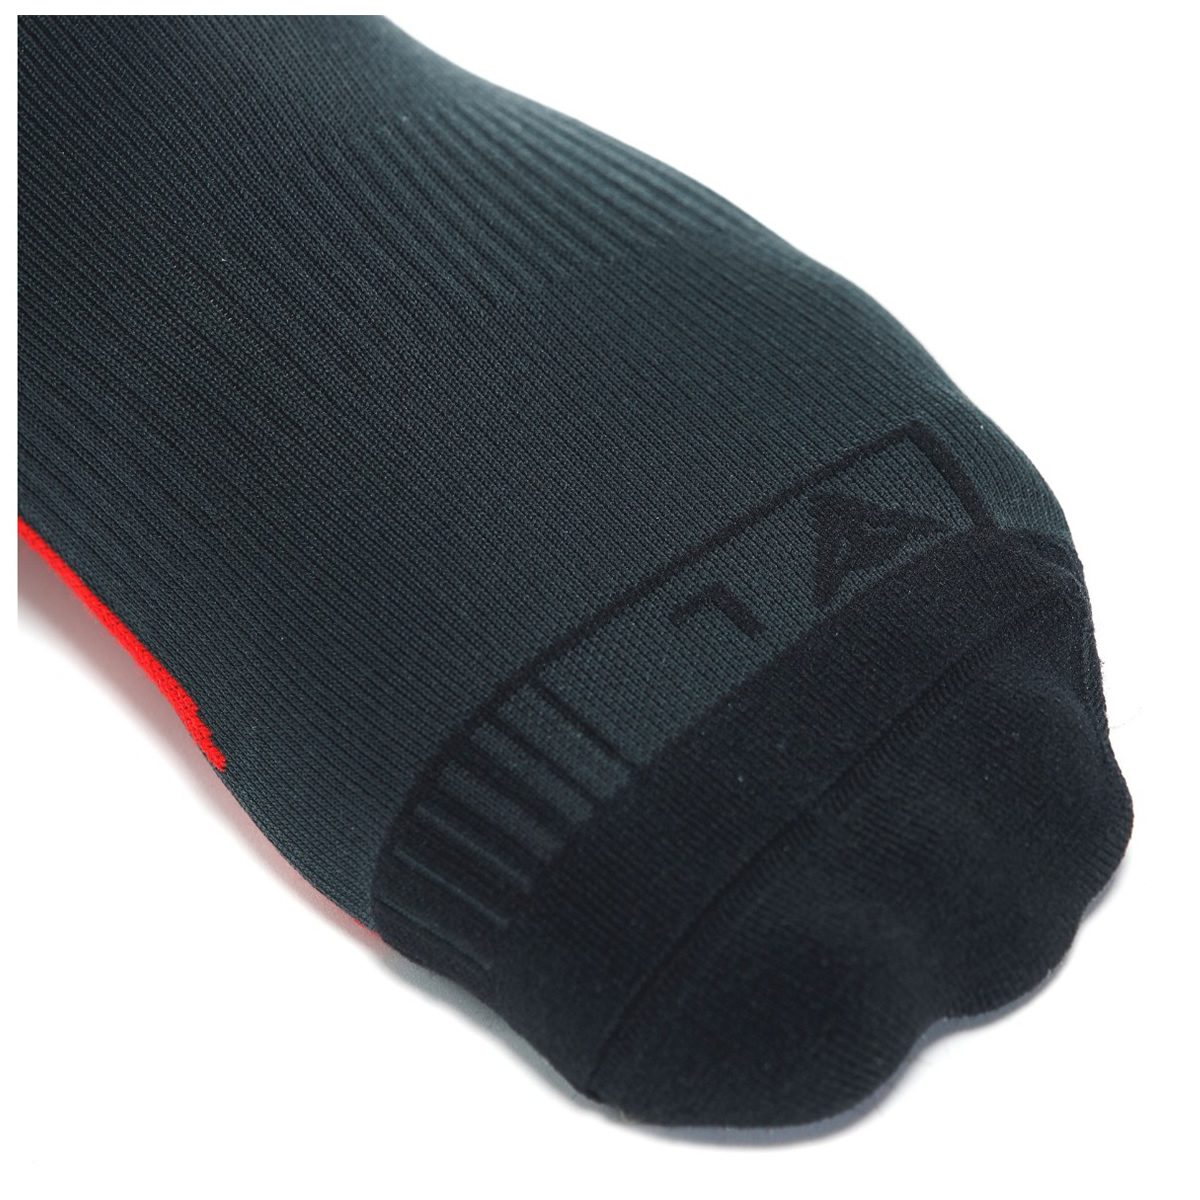 Dainese Socken Thermo Mid Socks, schwarz-rot